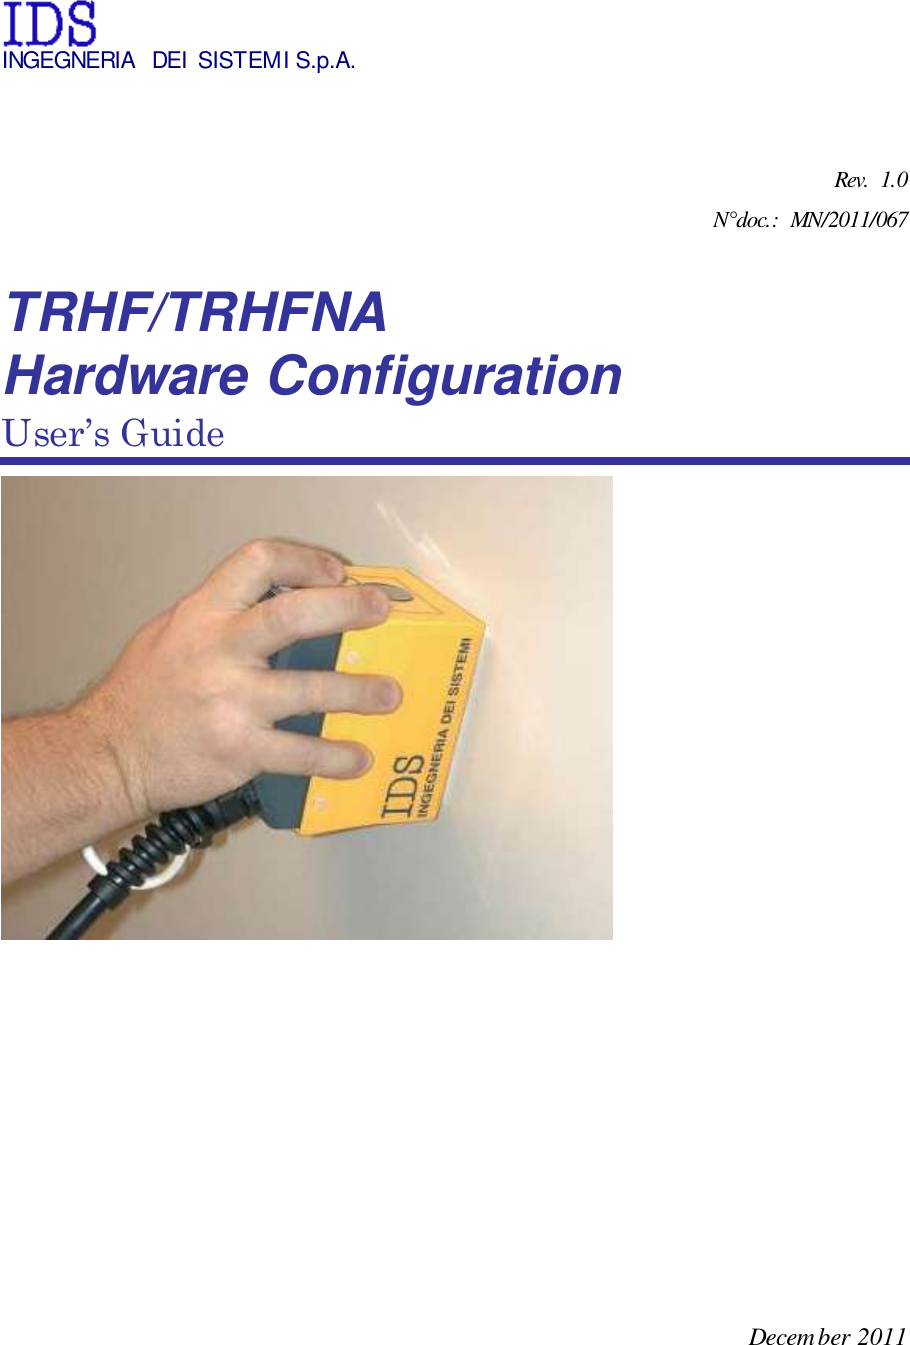   INGEGNERIA  DEI  SISTEMI S.p.A.   Rev.  1.0 N°doc.:  MN/2011/067  TRHF/TRHFNA Hardware Configuration User’s Guide           December 2011   